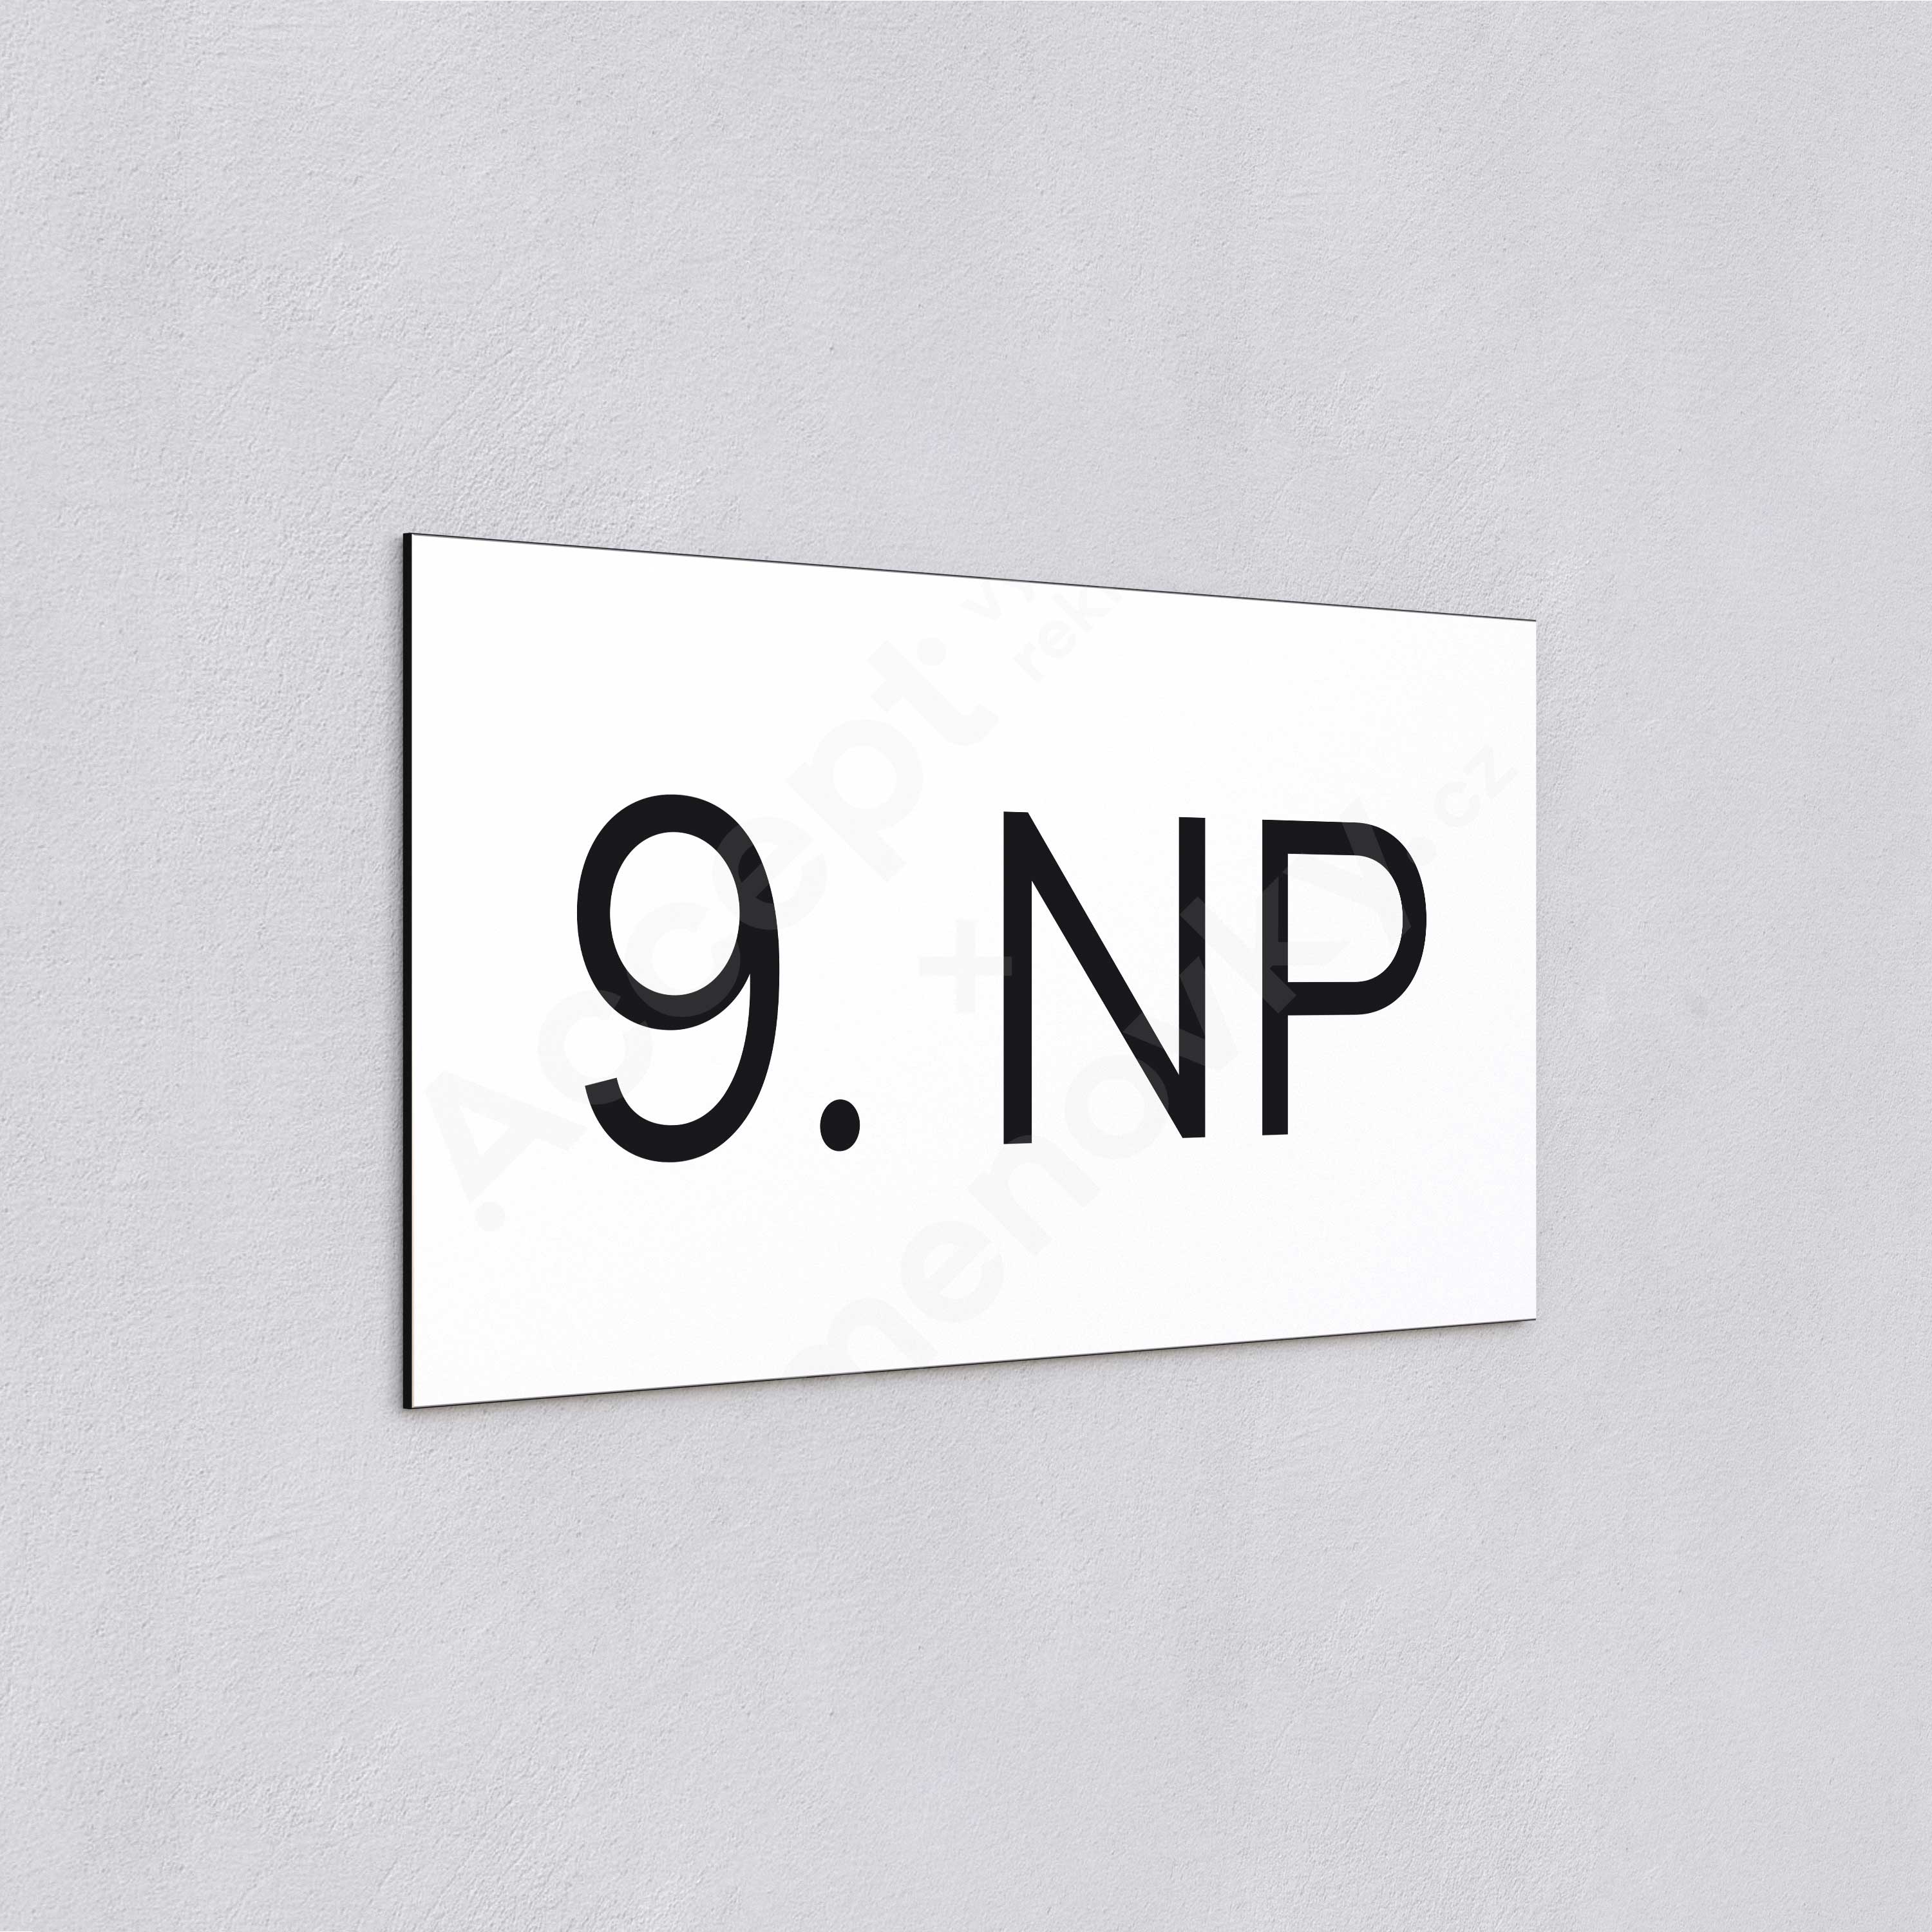 Označení podlaží "9. NP" - bílá tabulka - černý popis